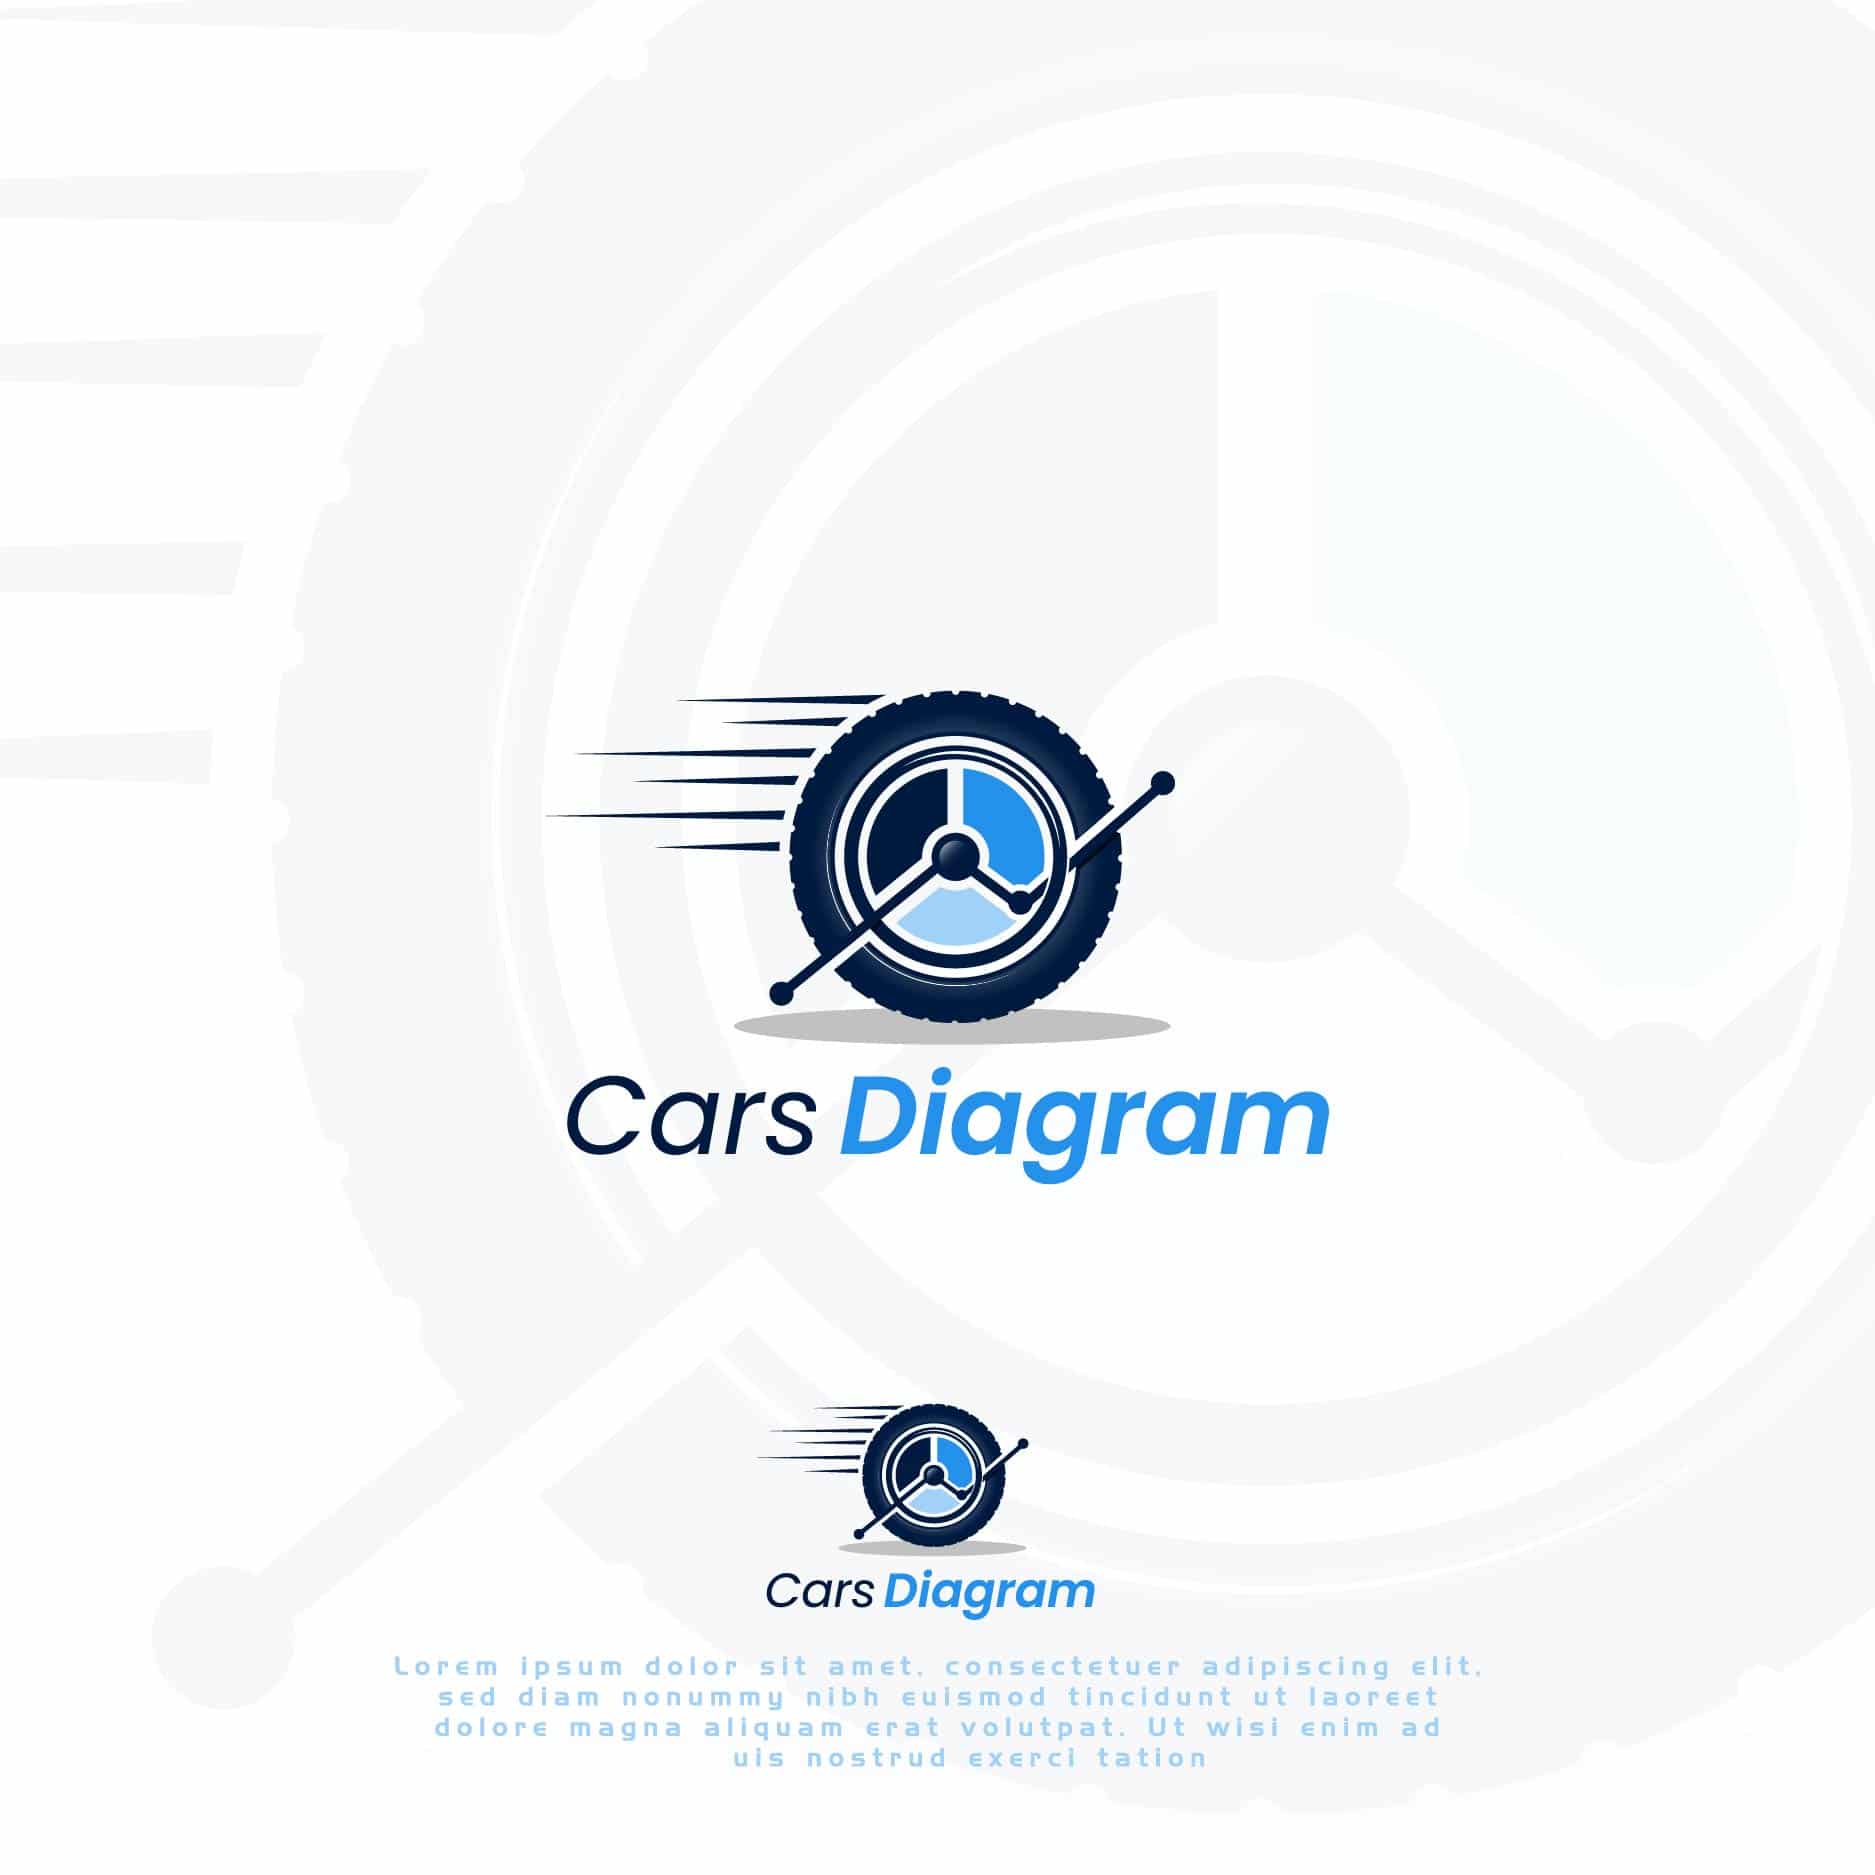 ICONIC LOGO DESIGN FOR CARS DIAGRAM